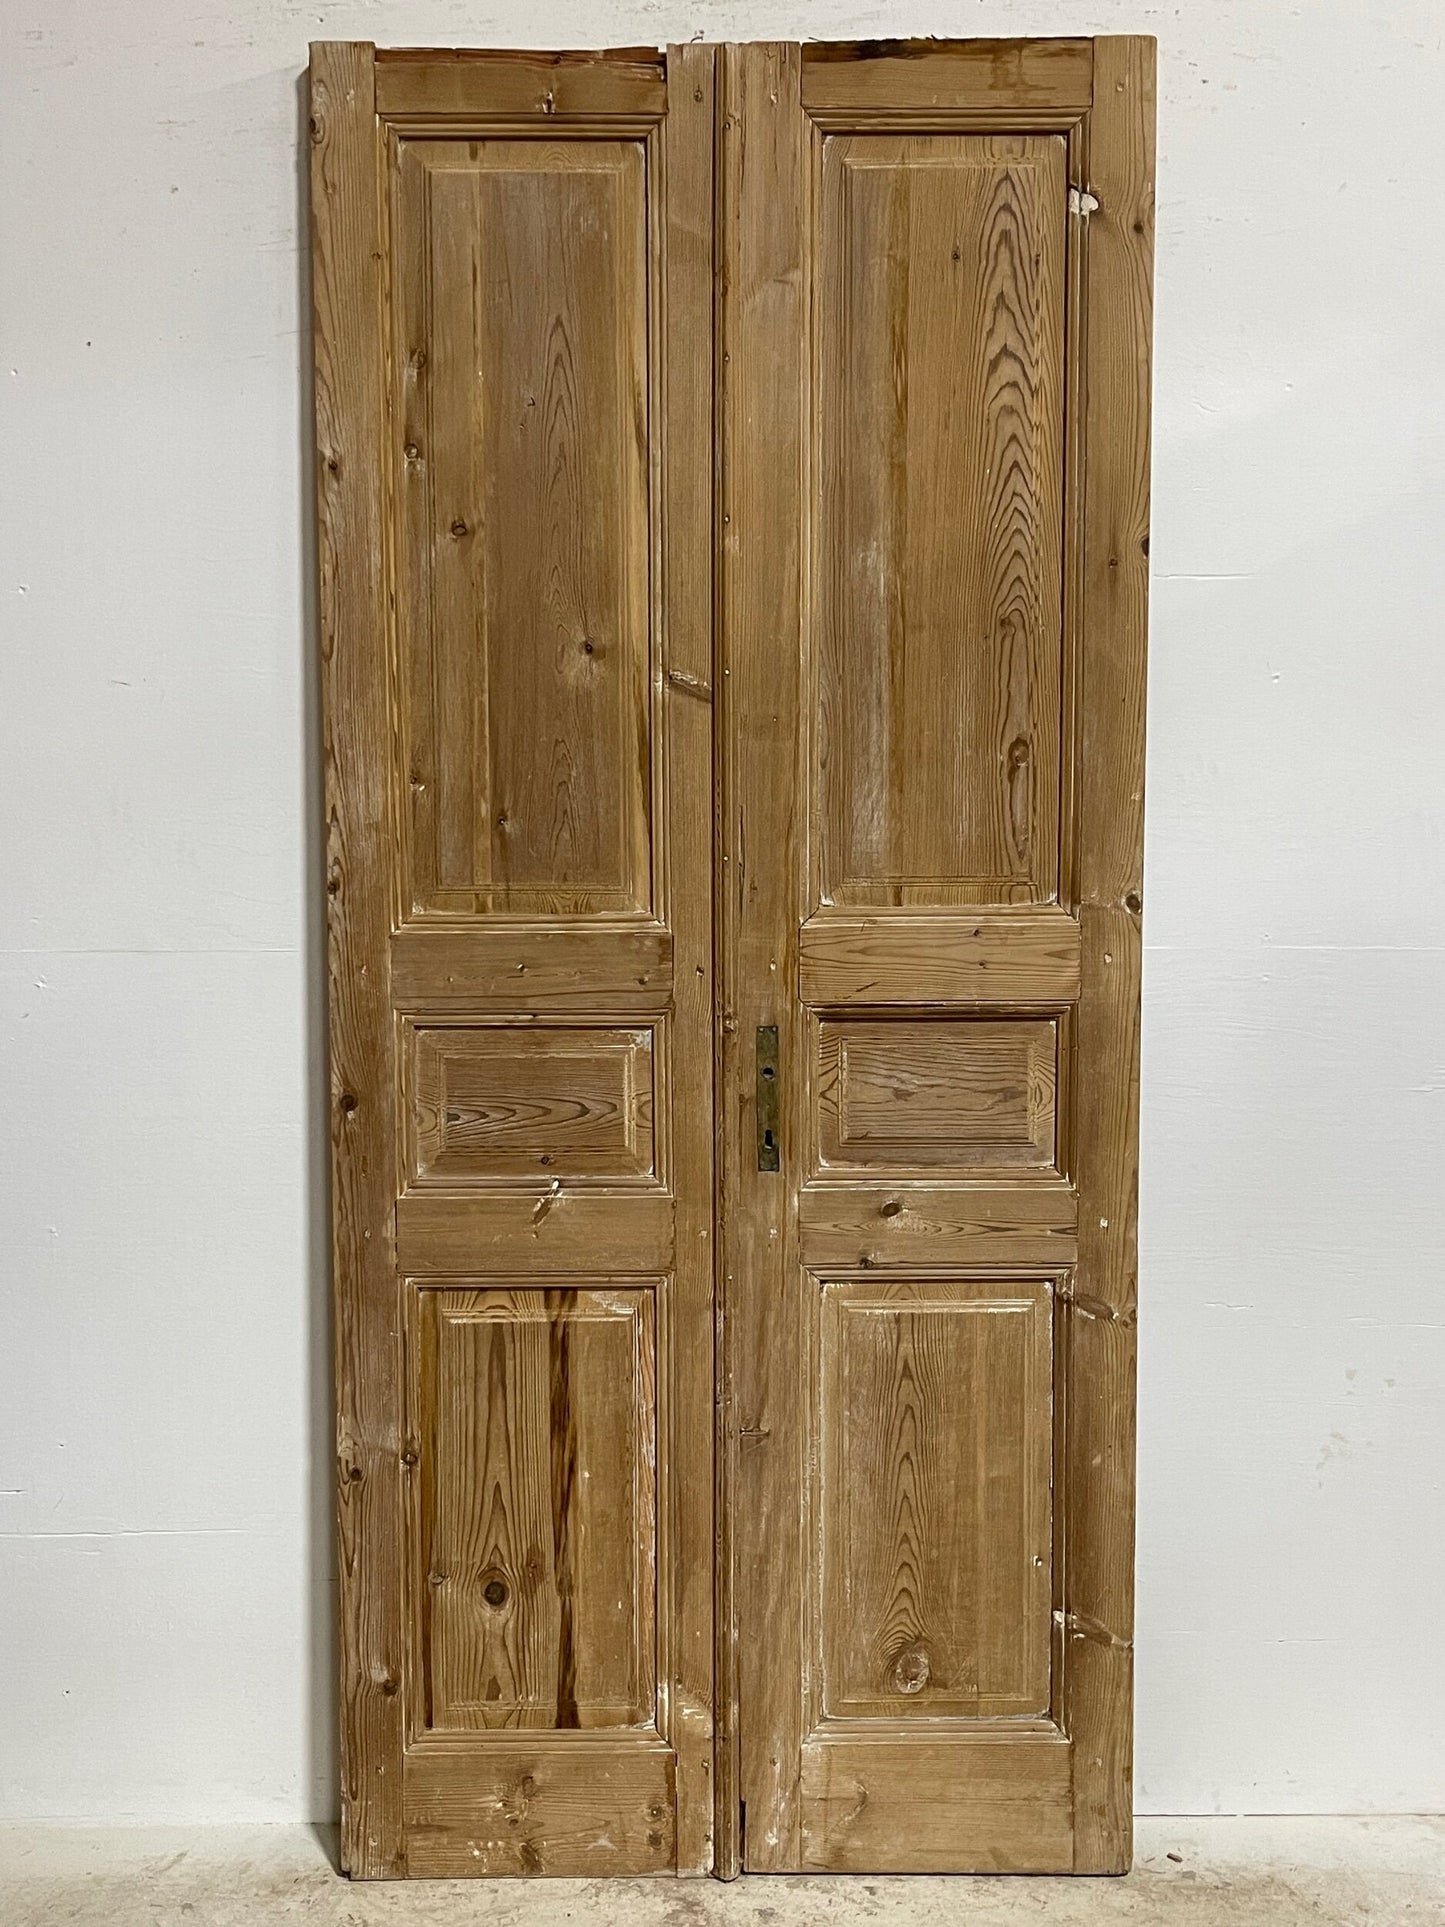 Antique French doors (92.75x41.25) H0159s